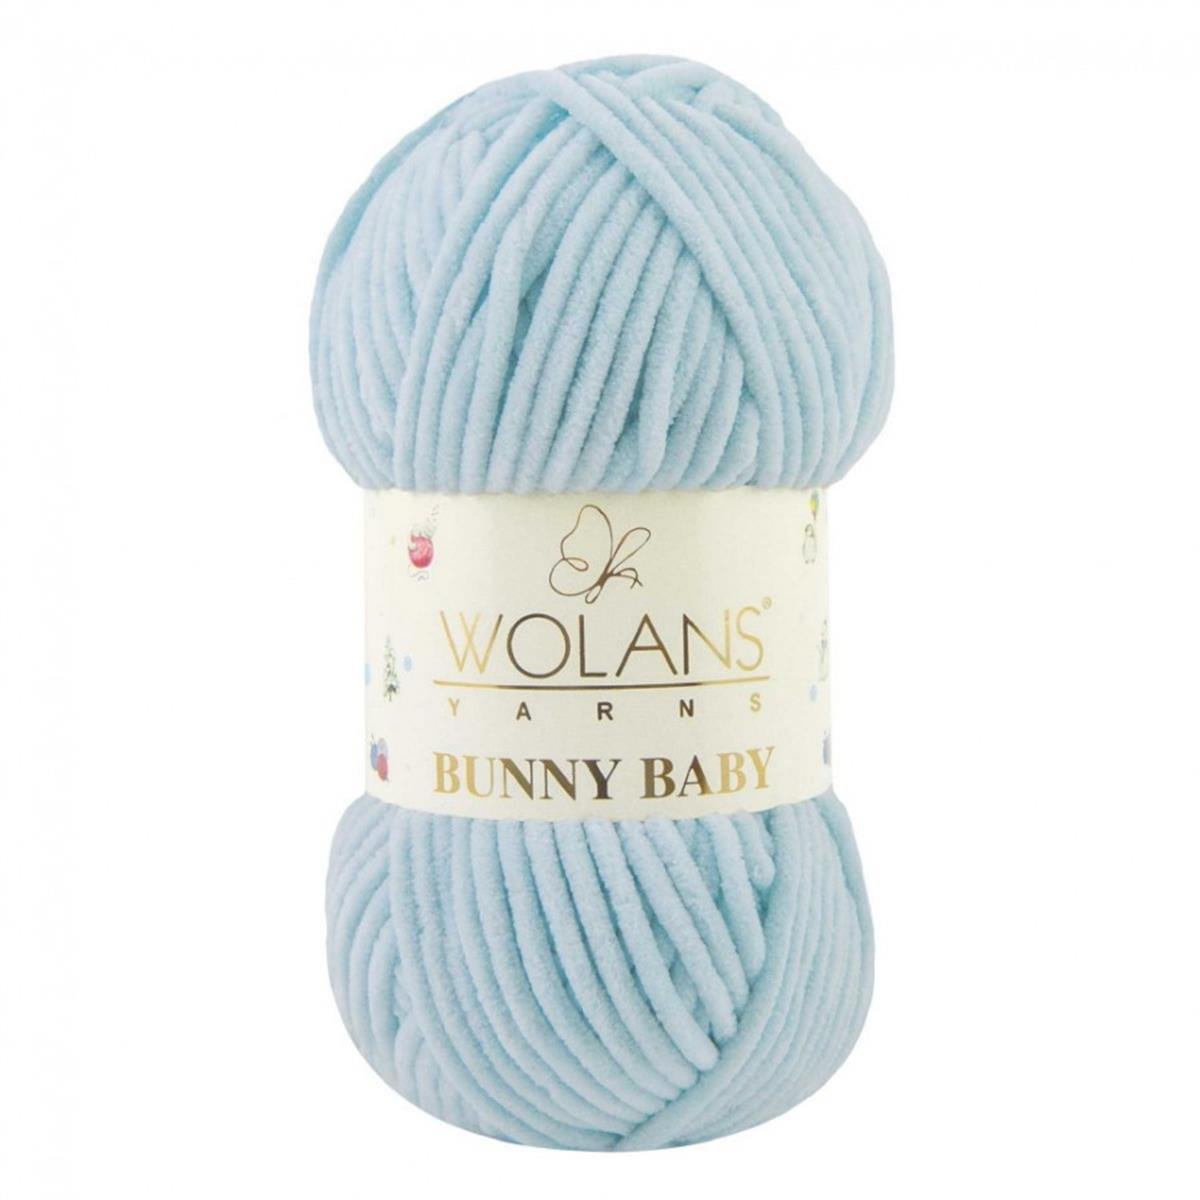 Wolan Bunny Baby Yarn - Chenille Yarn